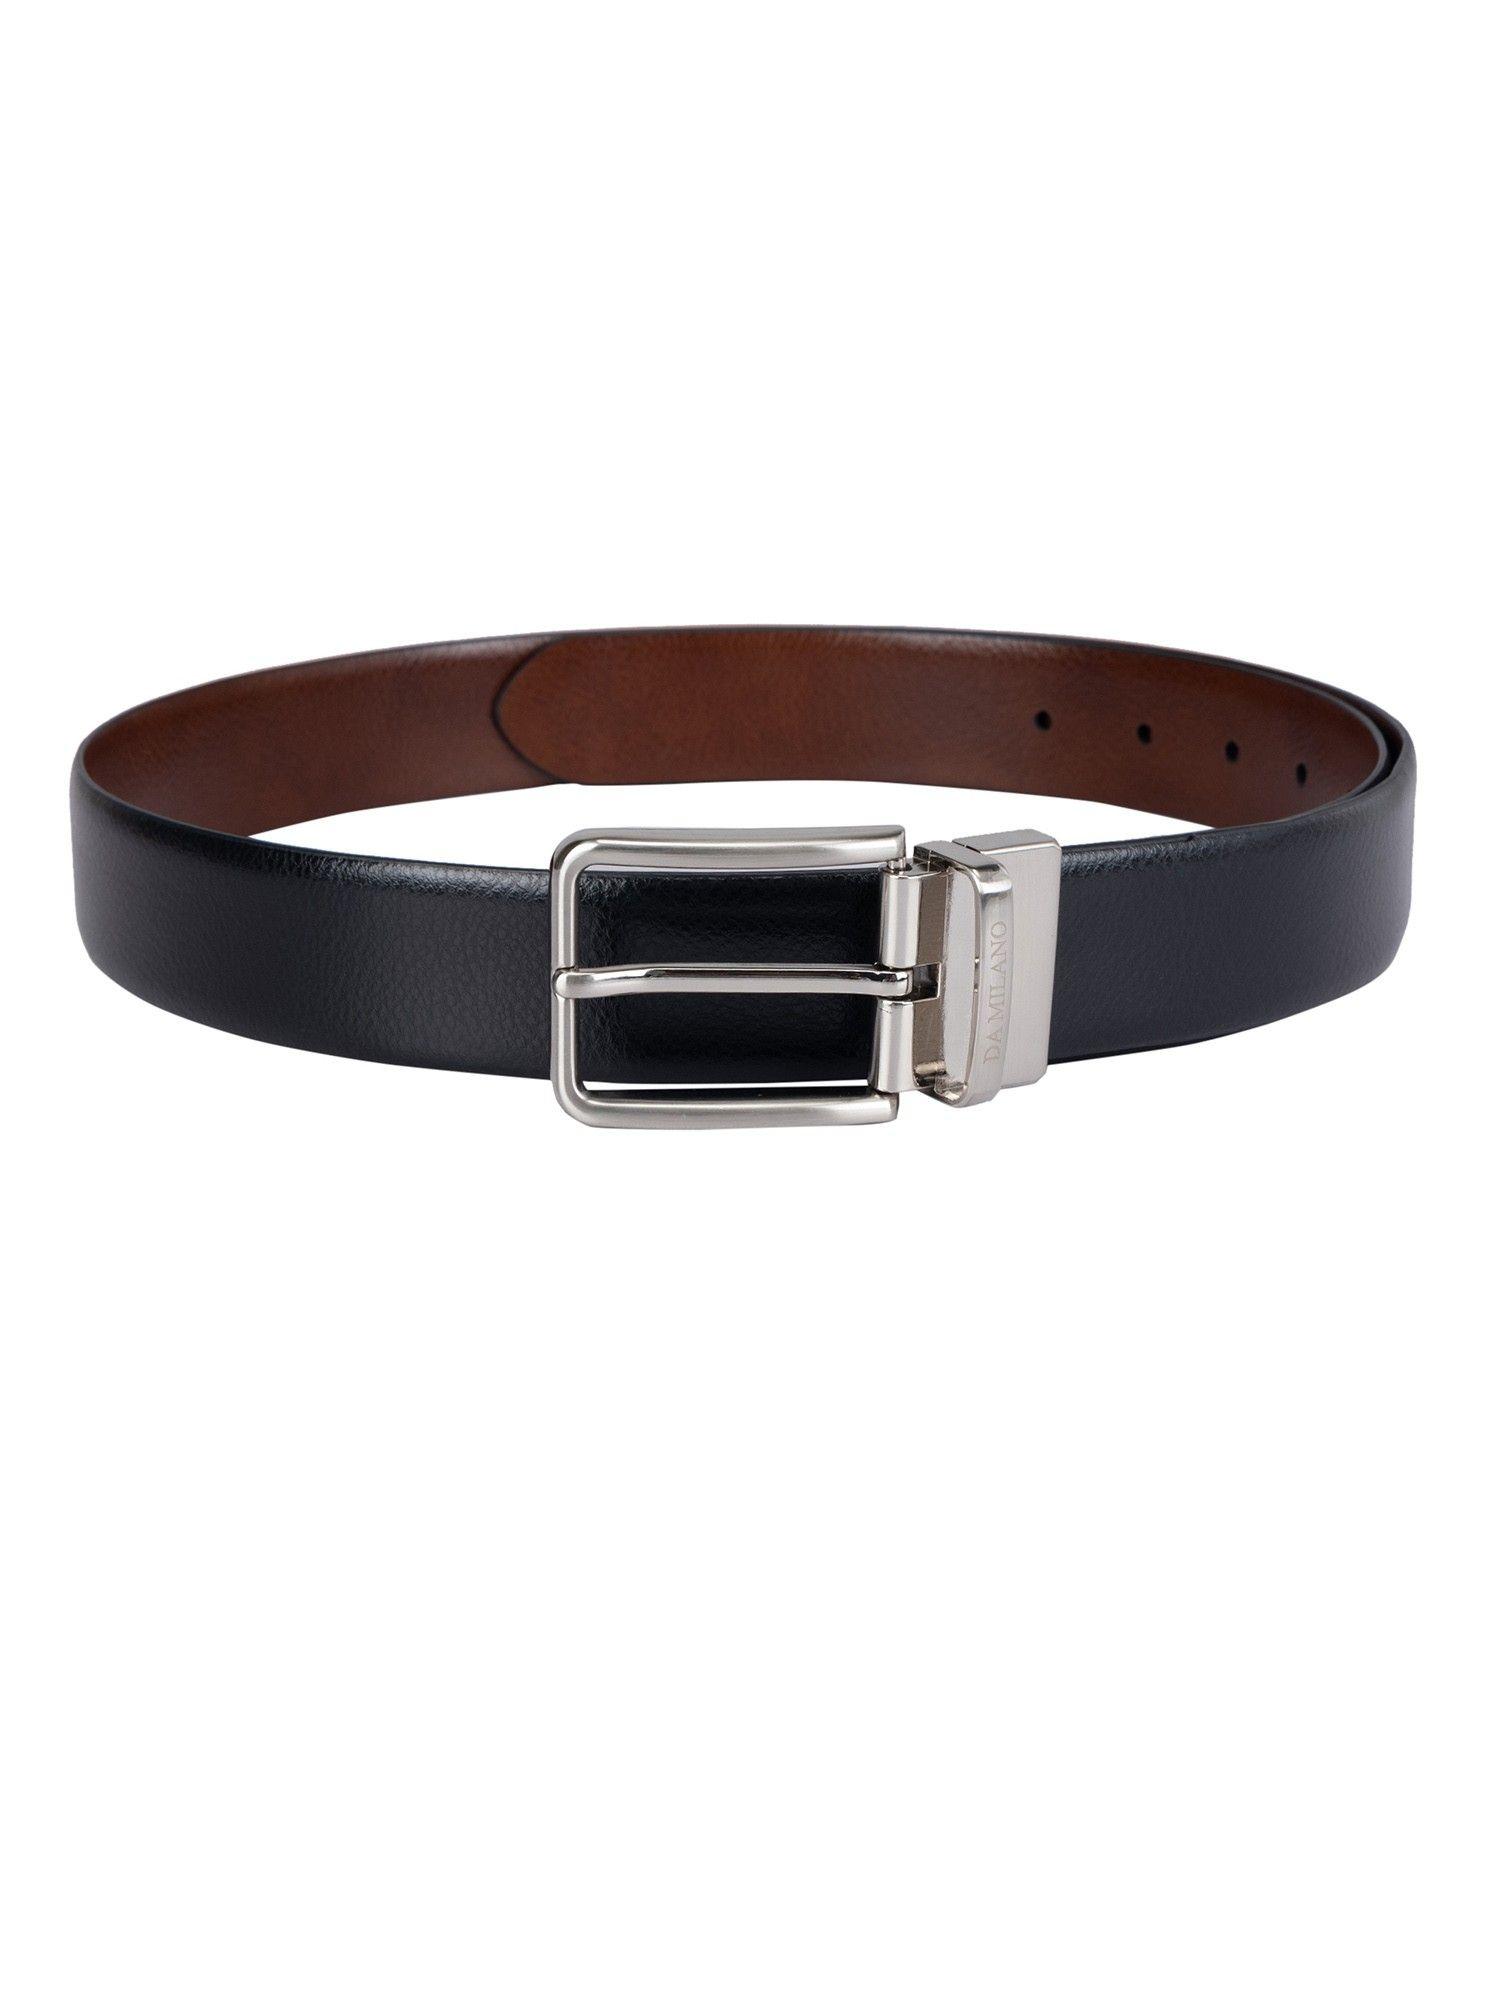 wax leather black & brown reversible belt bm-3215c-35r-olblkbrnwax